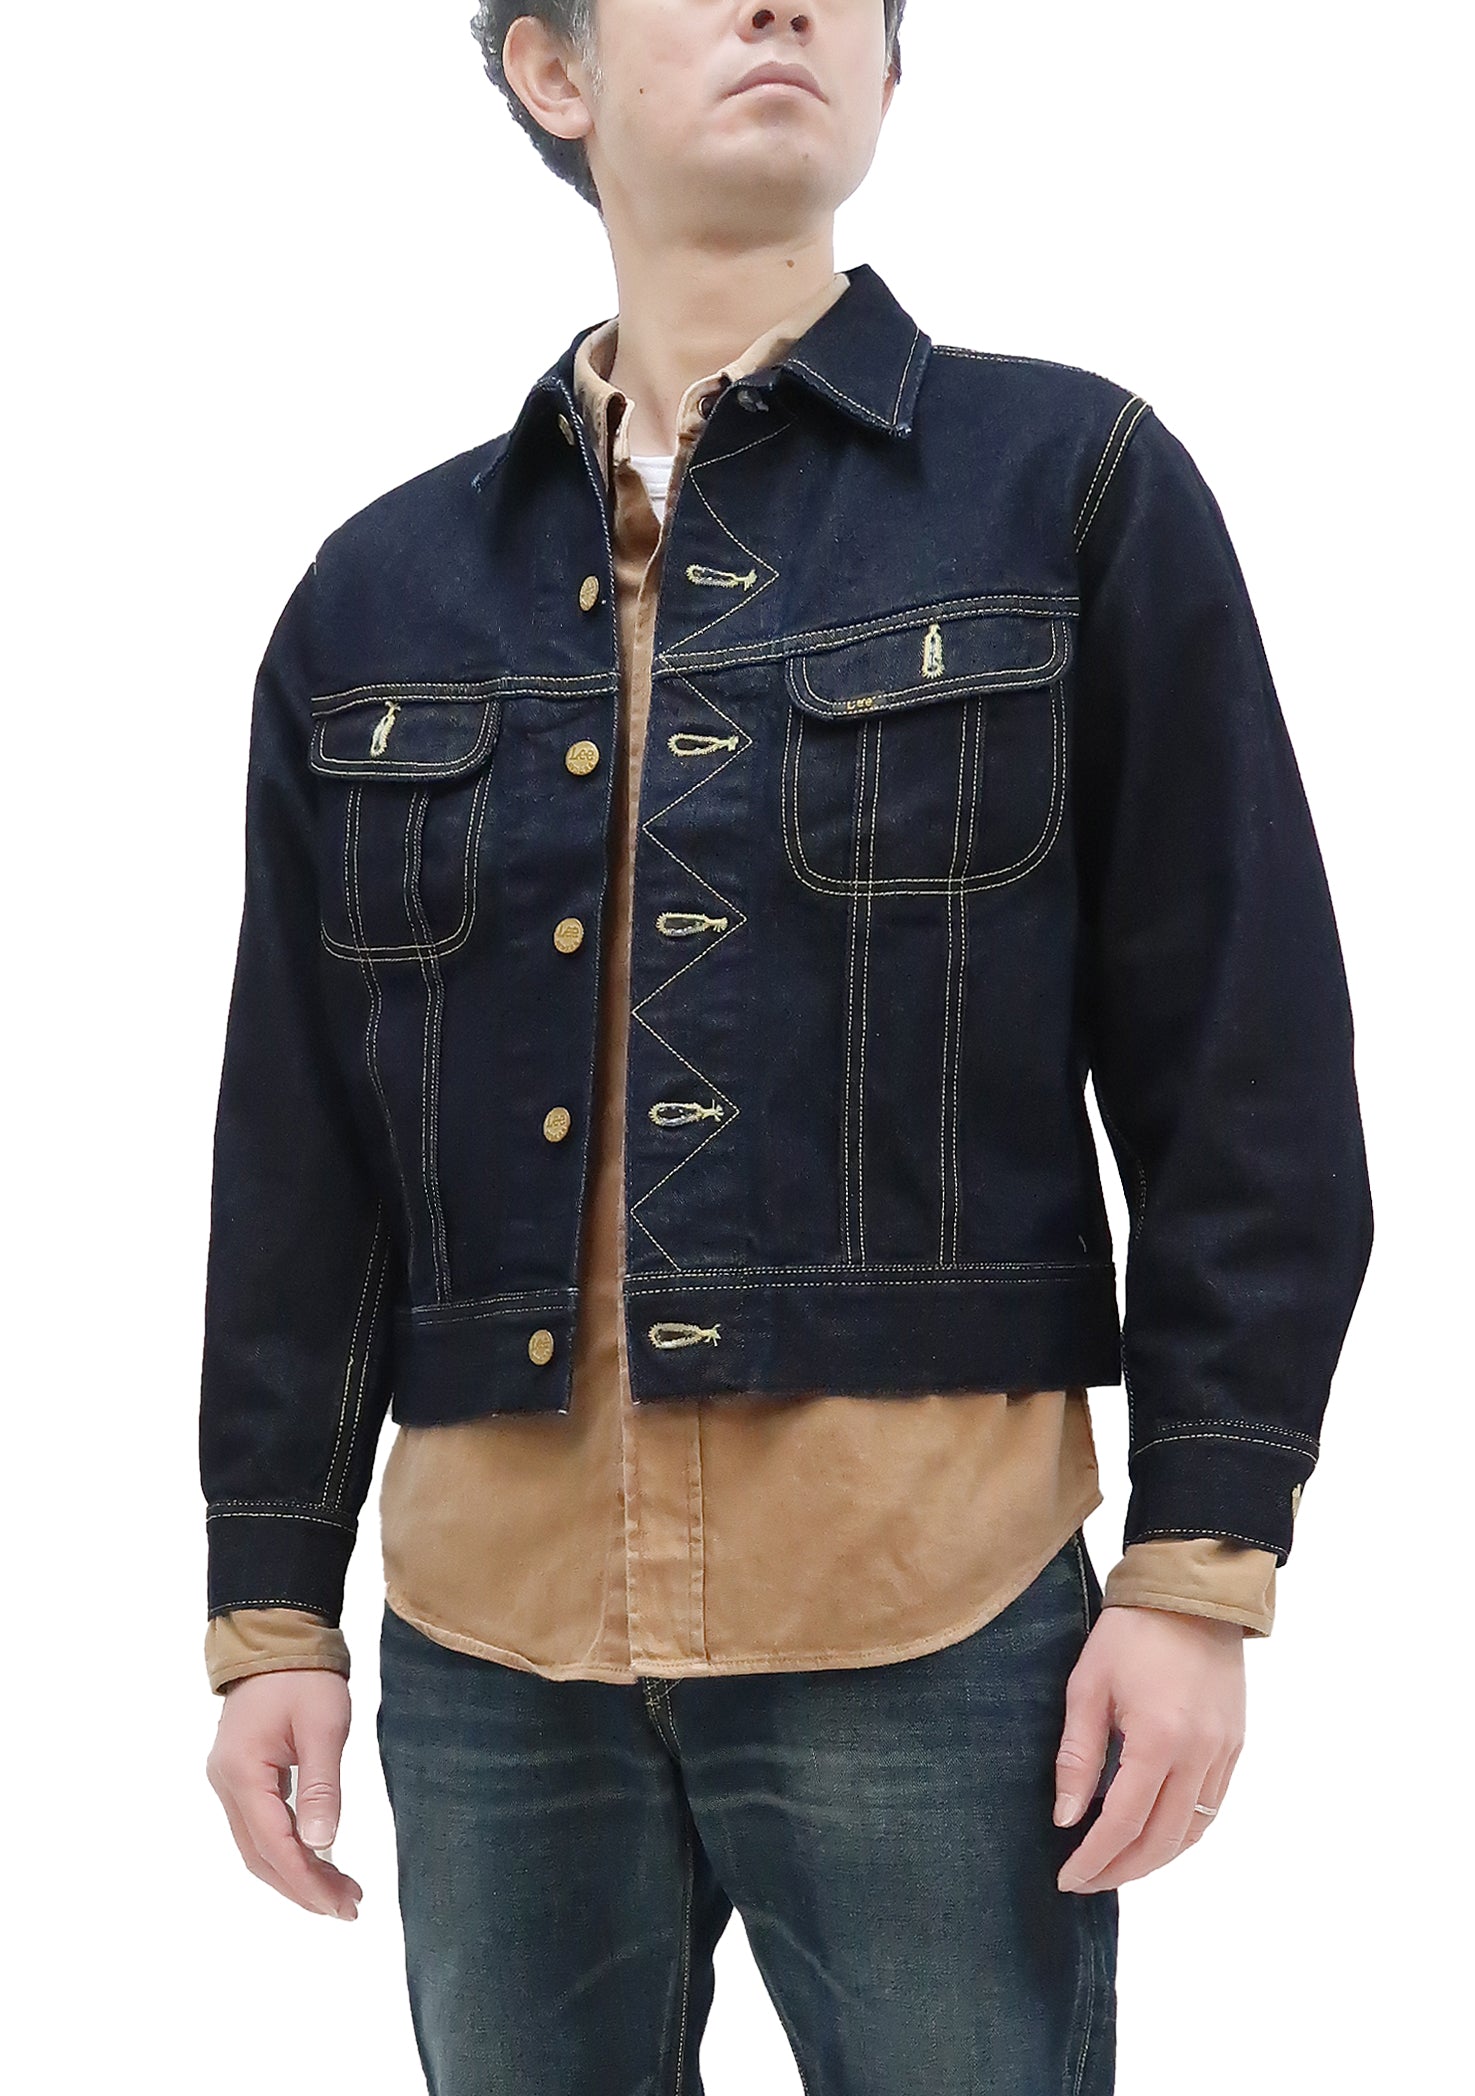 Lee Men's Denim Jacket, Old School, Small : Amazon.sg: Fashion